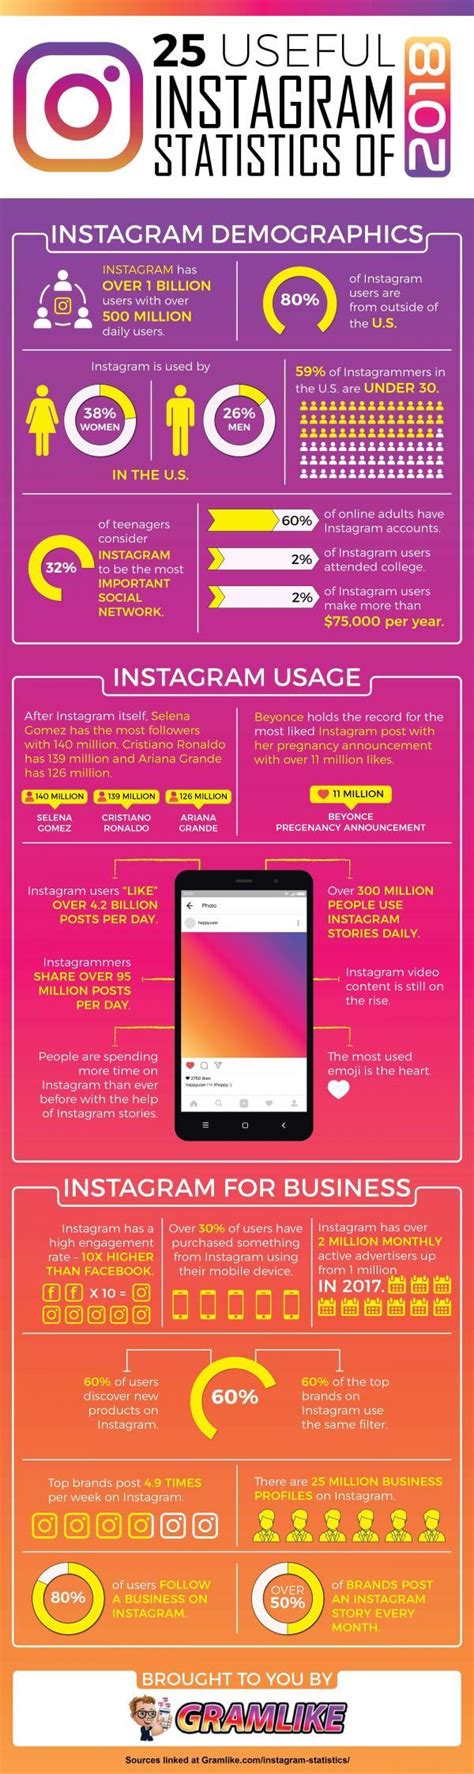 25 Useful Instagram Statistics Of 2018 Infographic